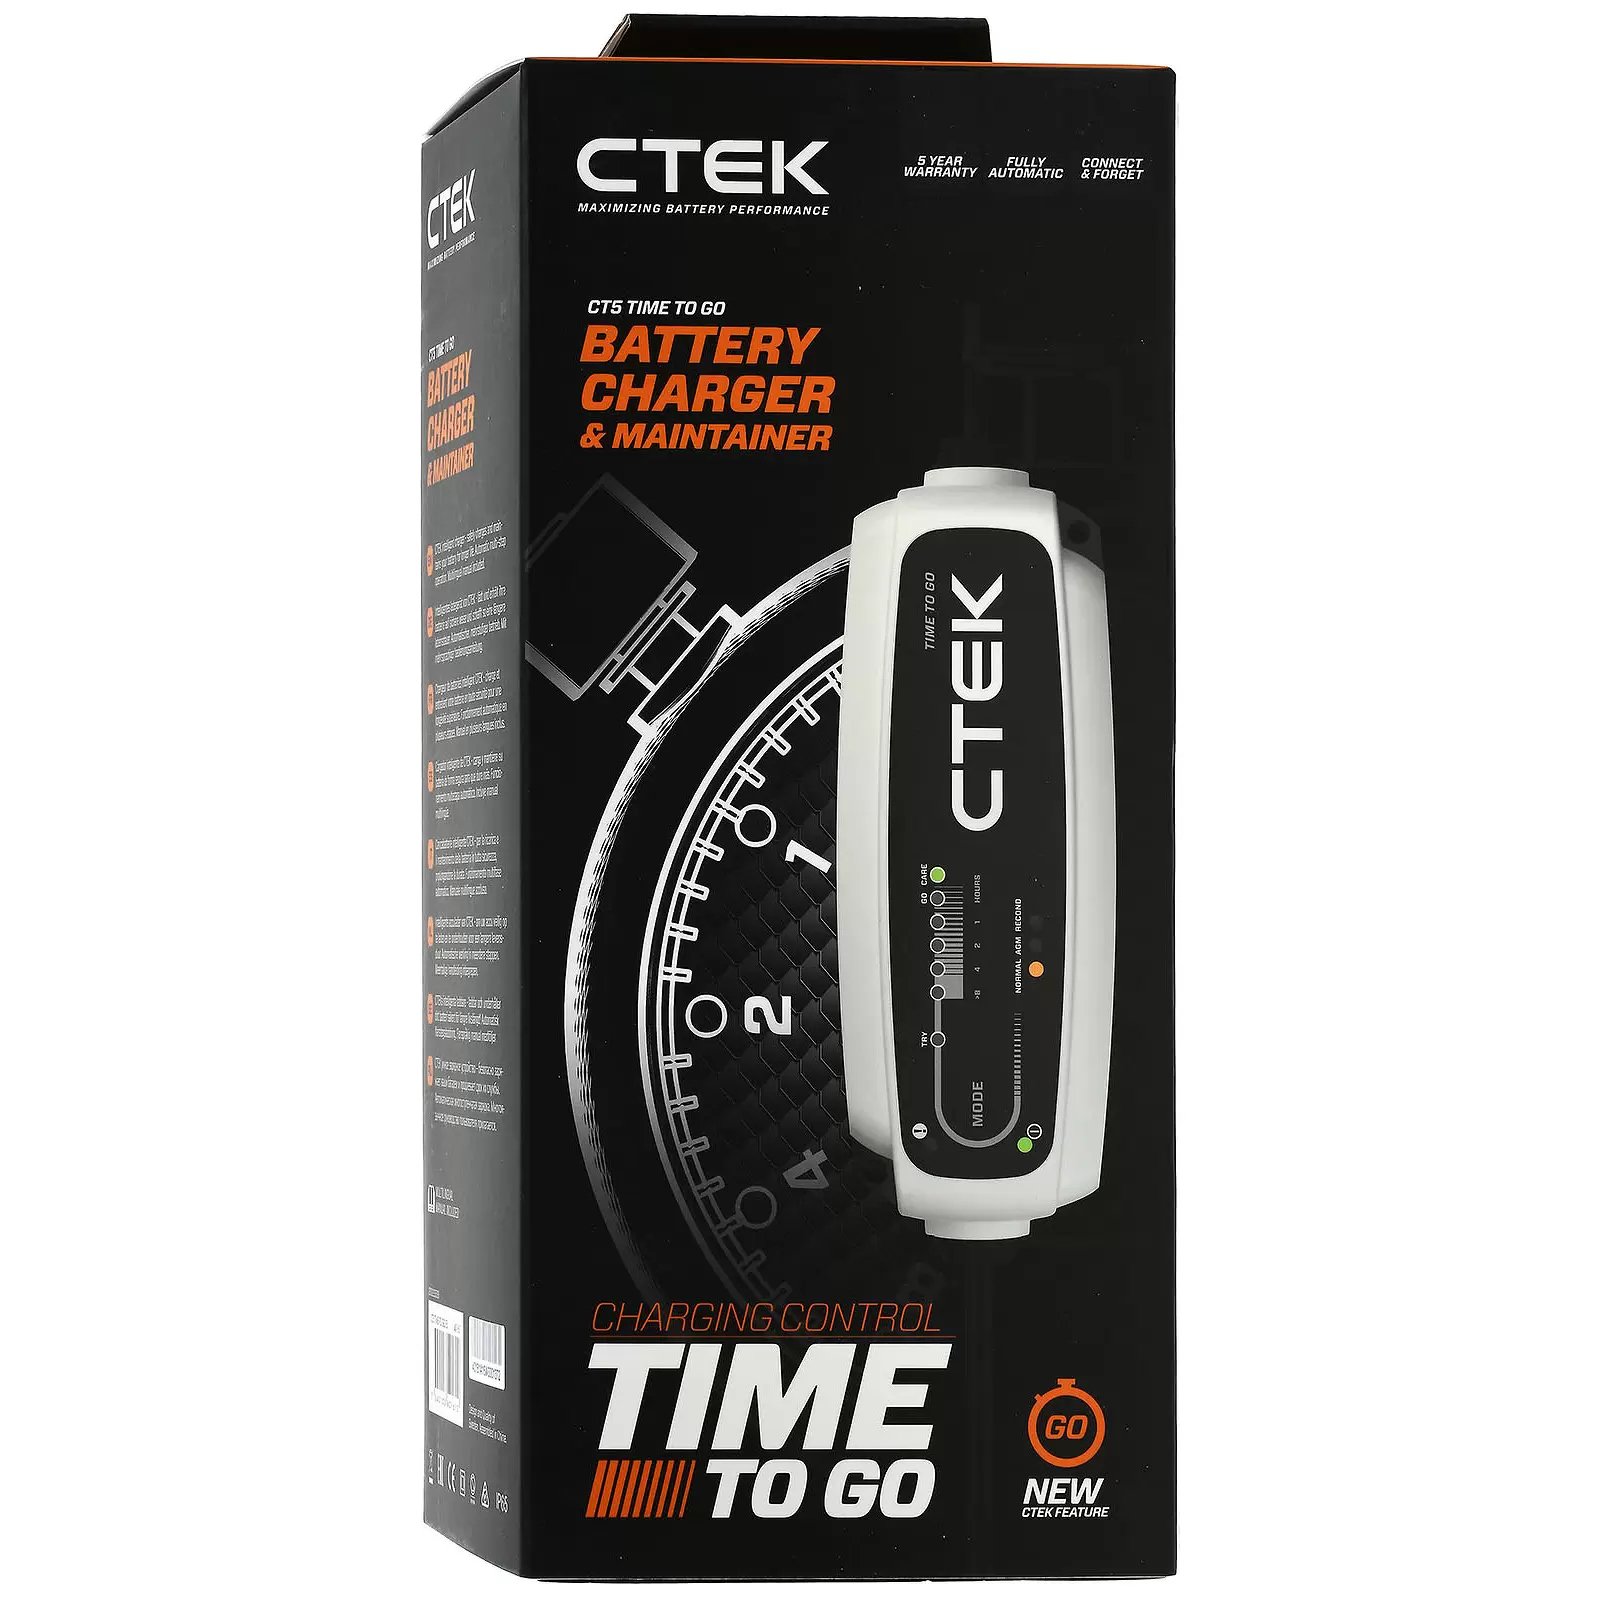 CTEK CT5 Time to Go, Batterie-Ladegerät, mit Countdown-Display 12V